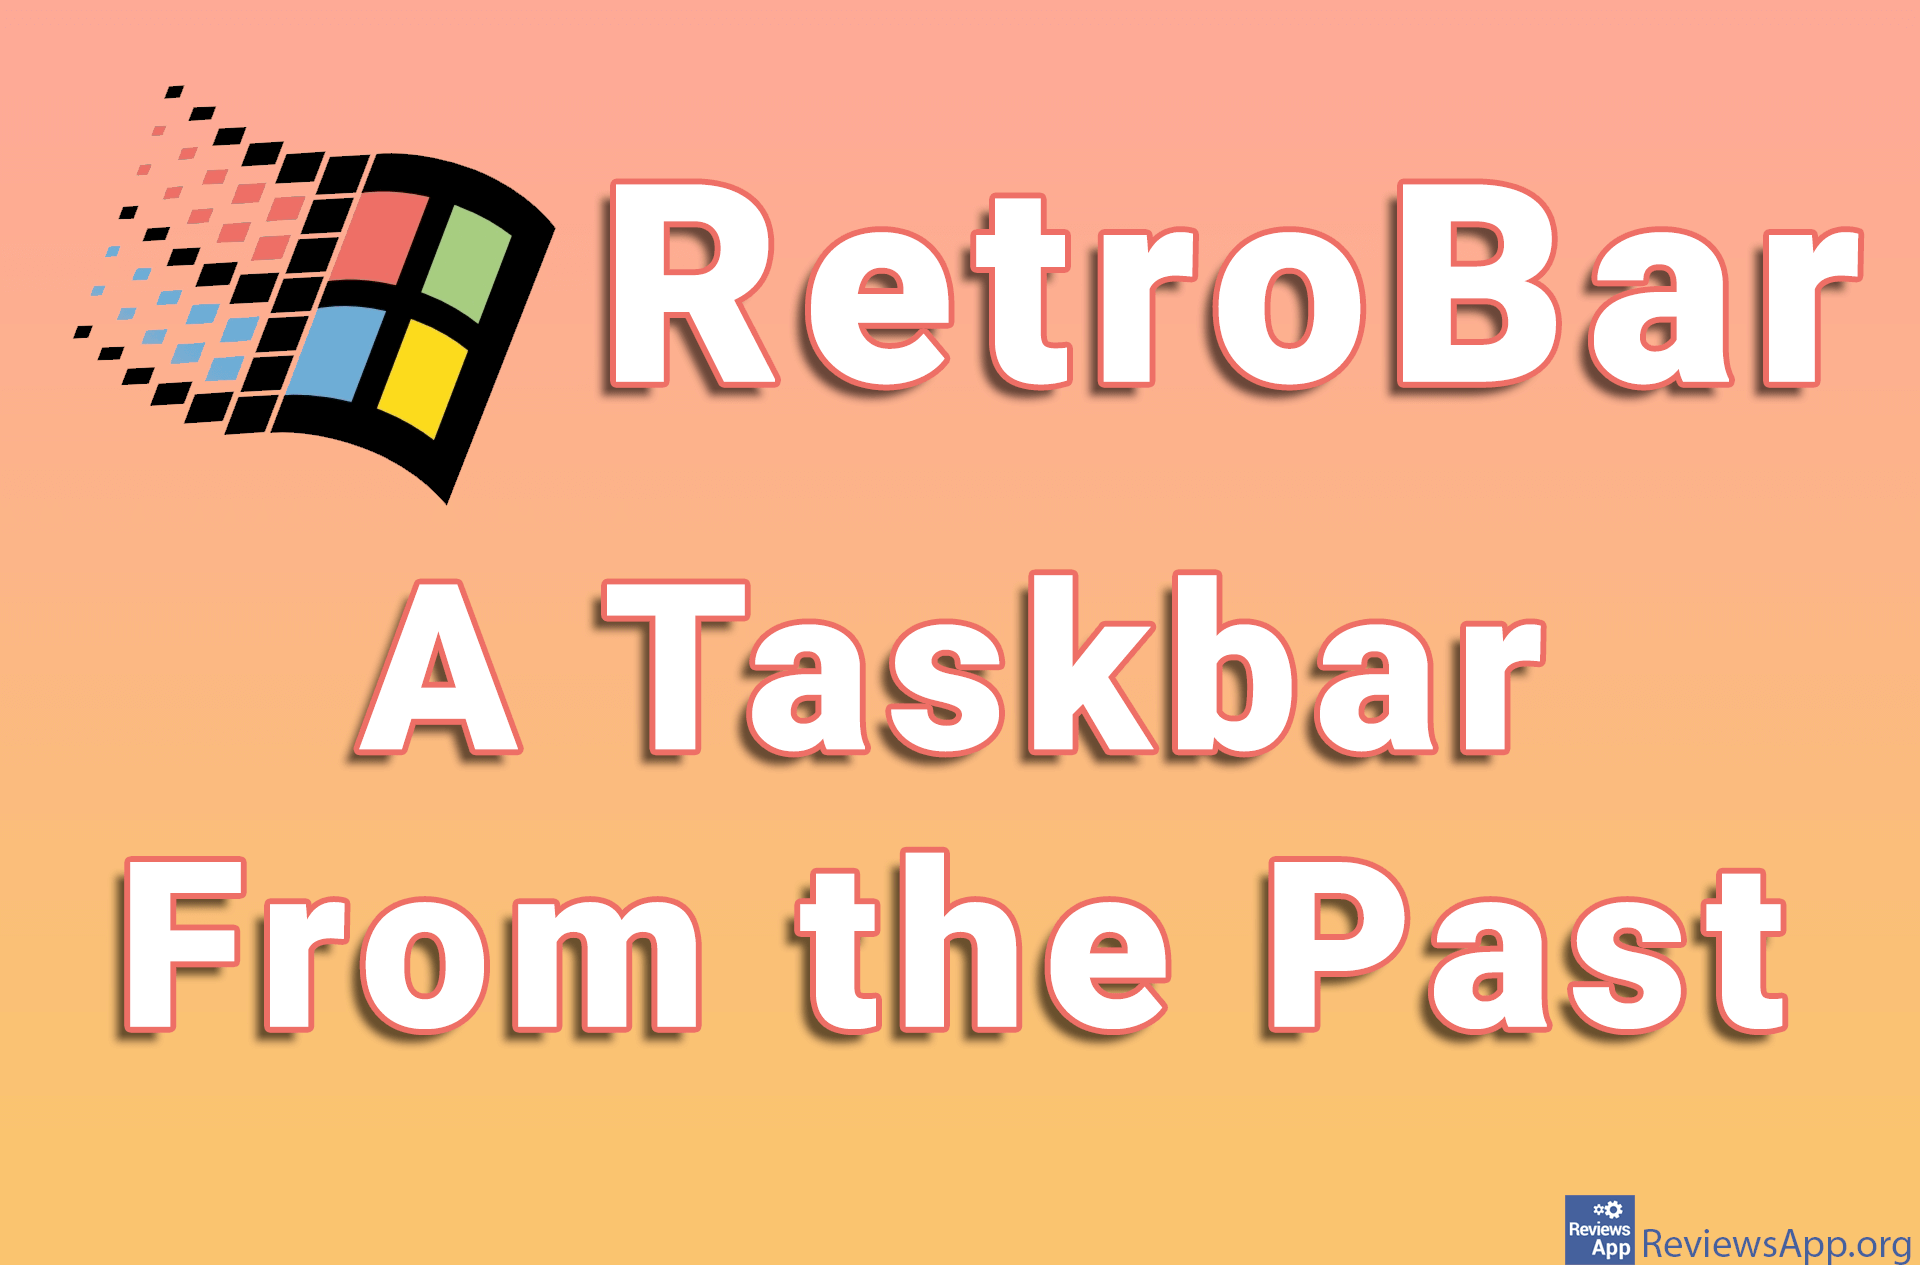 RetroBar – A Taskbar From the Past